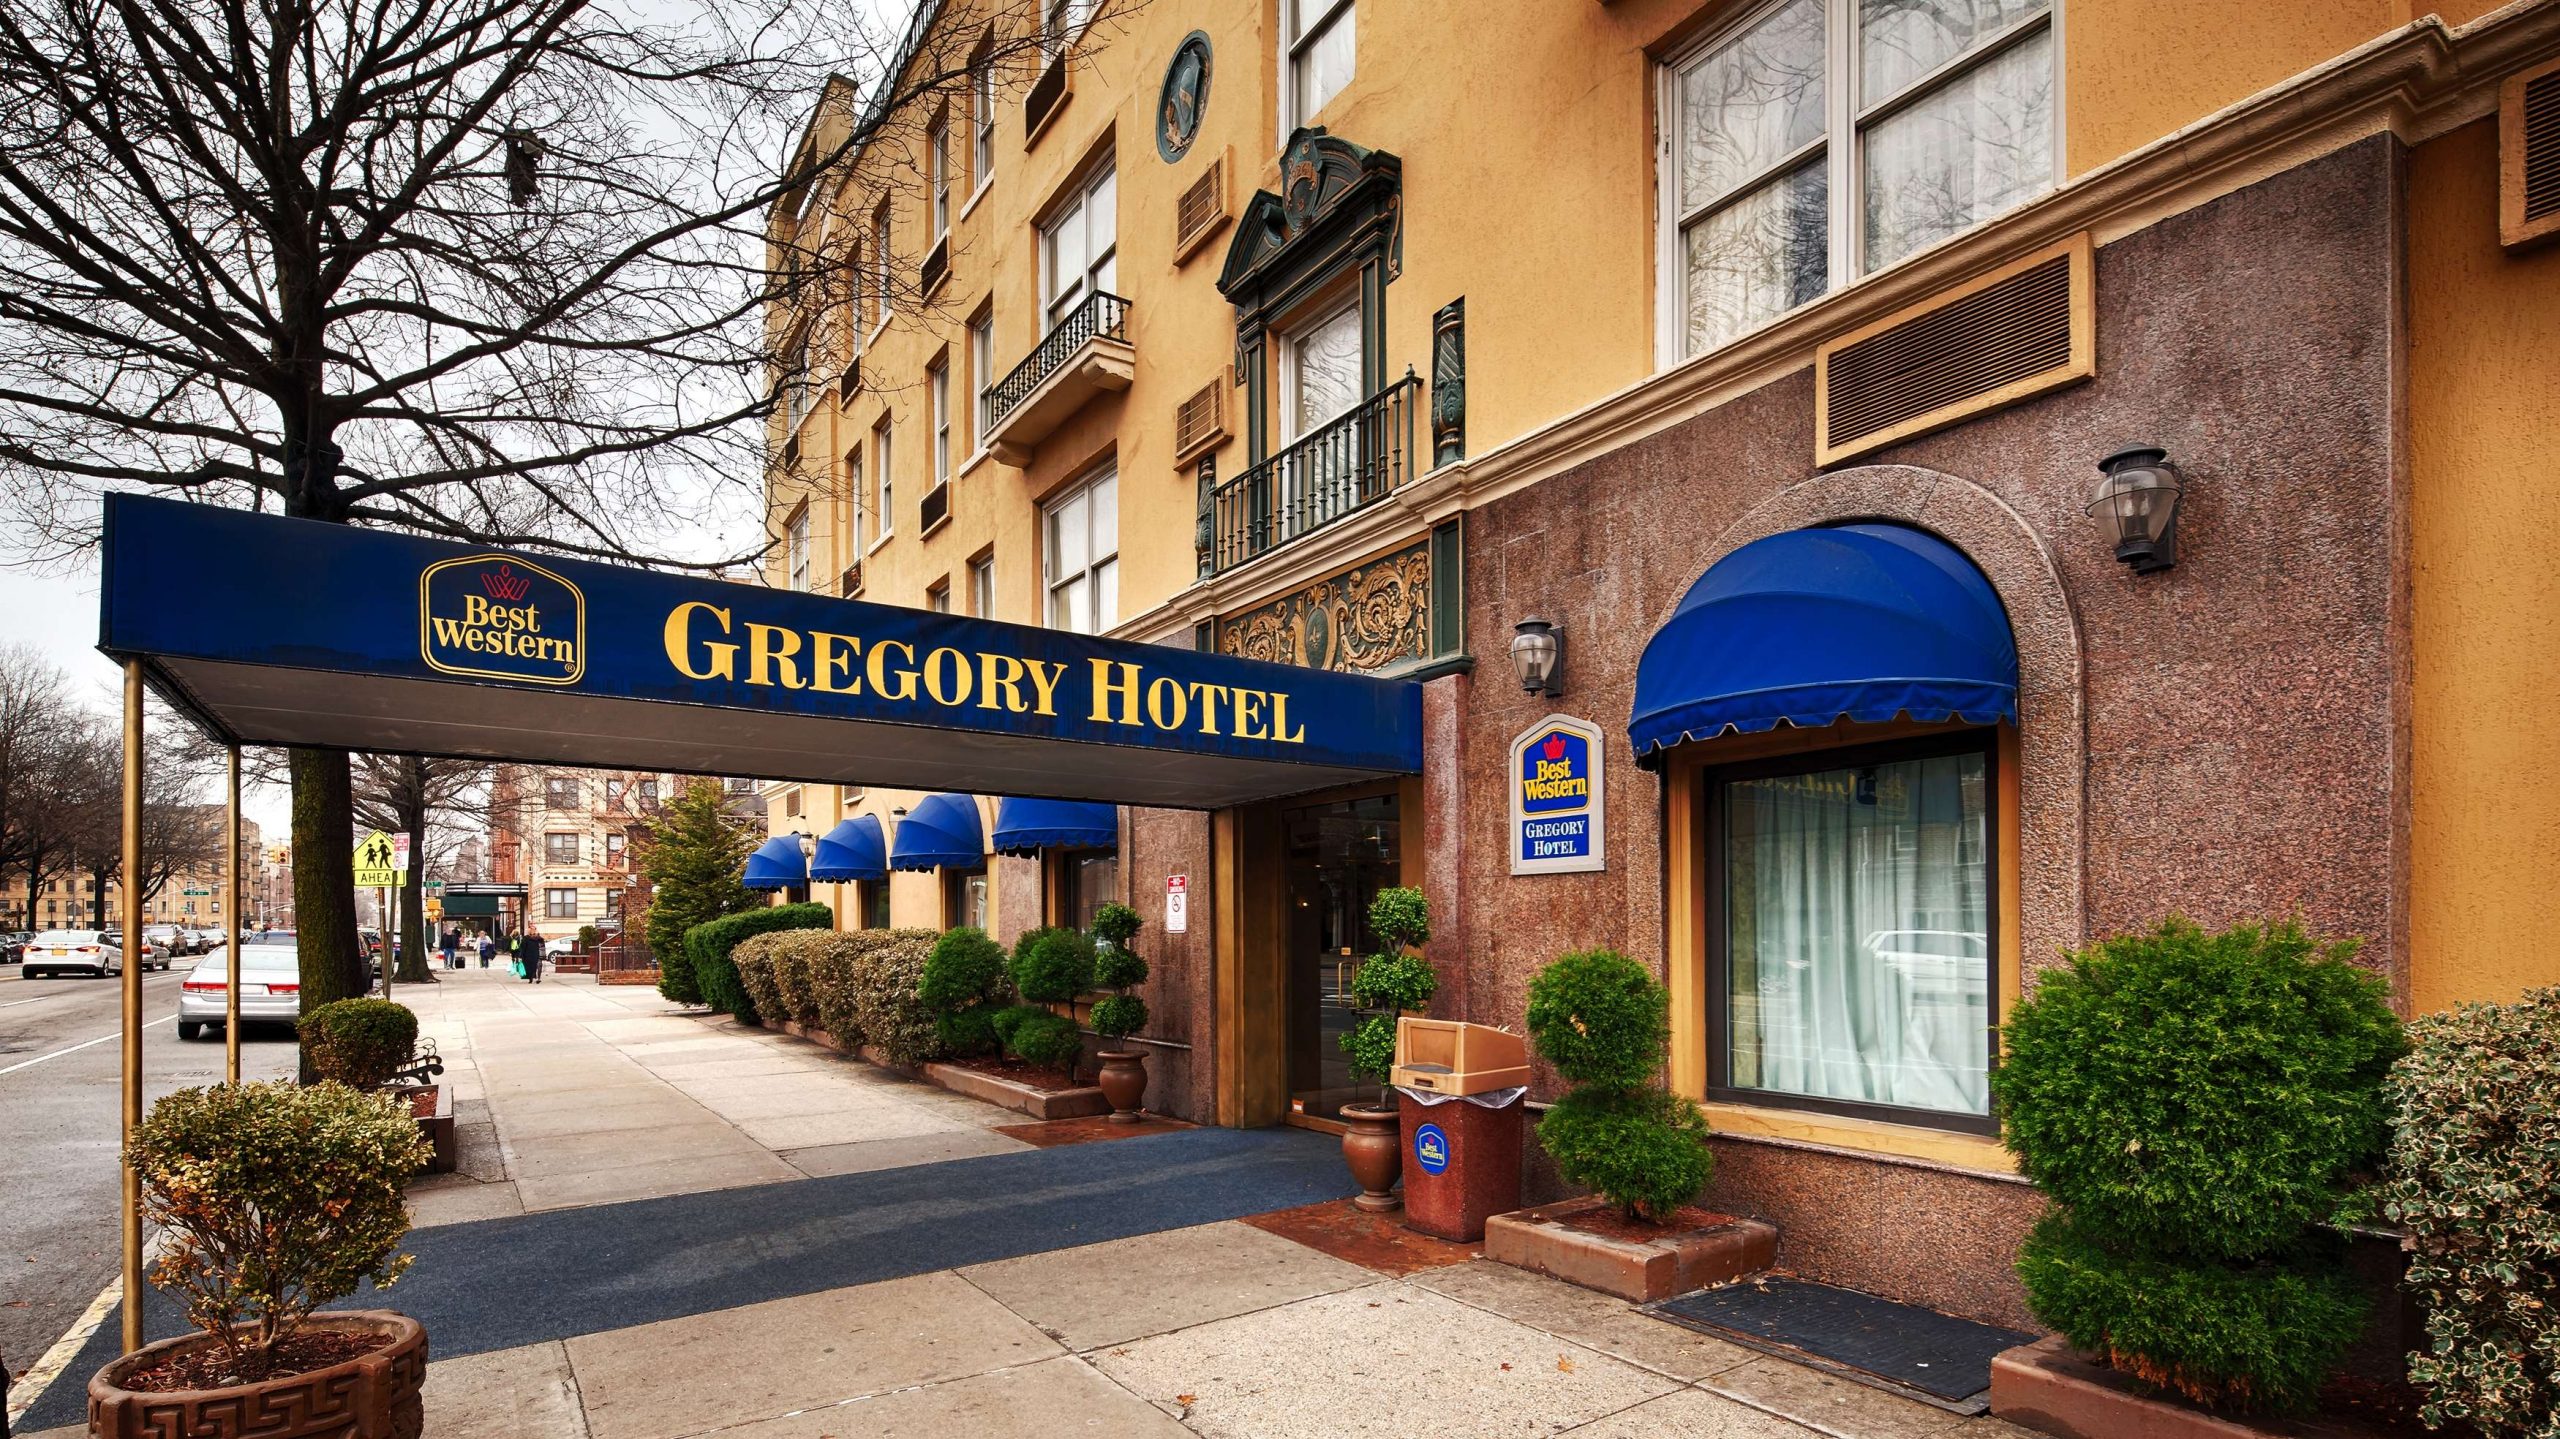 Best Western Gregory Hotel in Brooklyn, NY